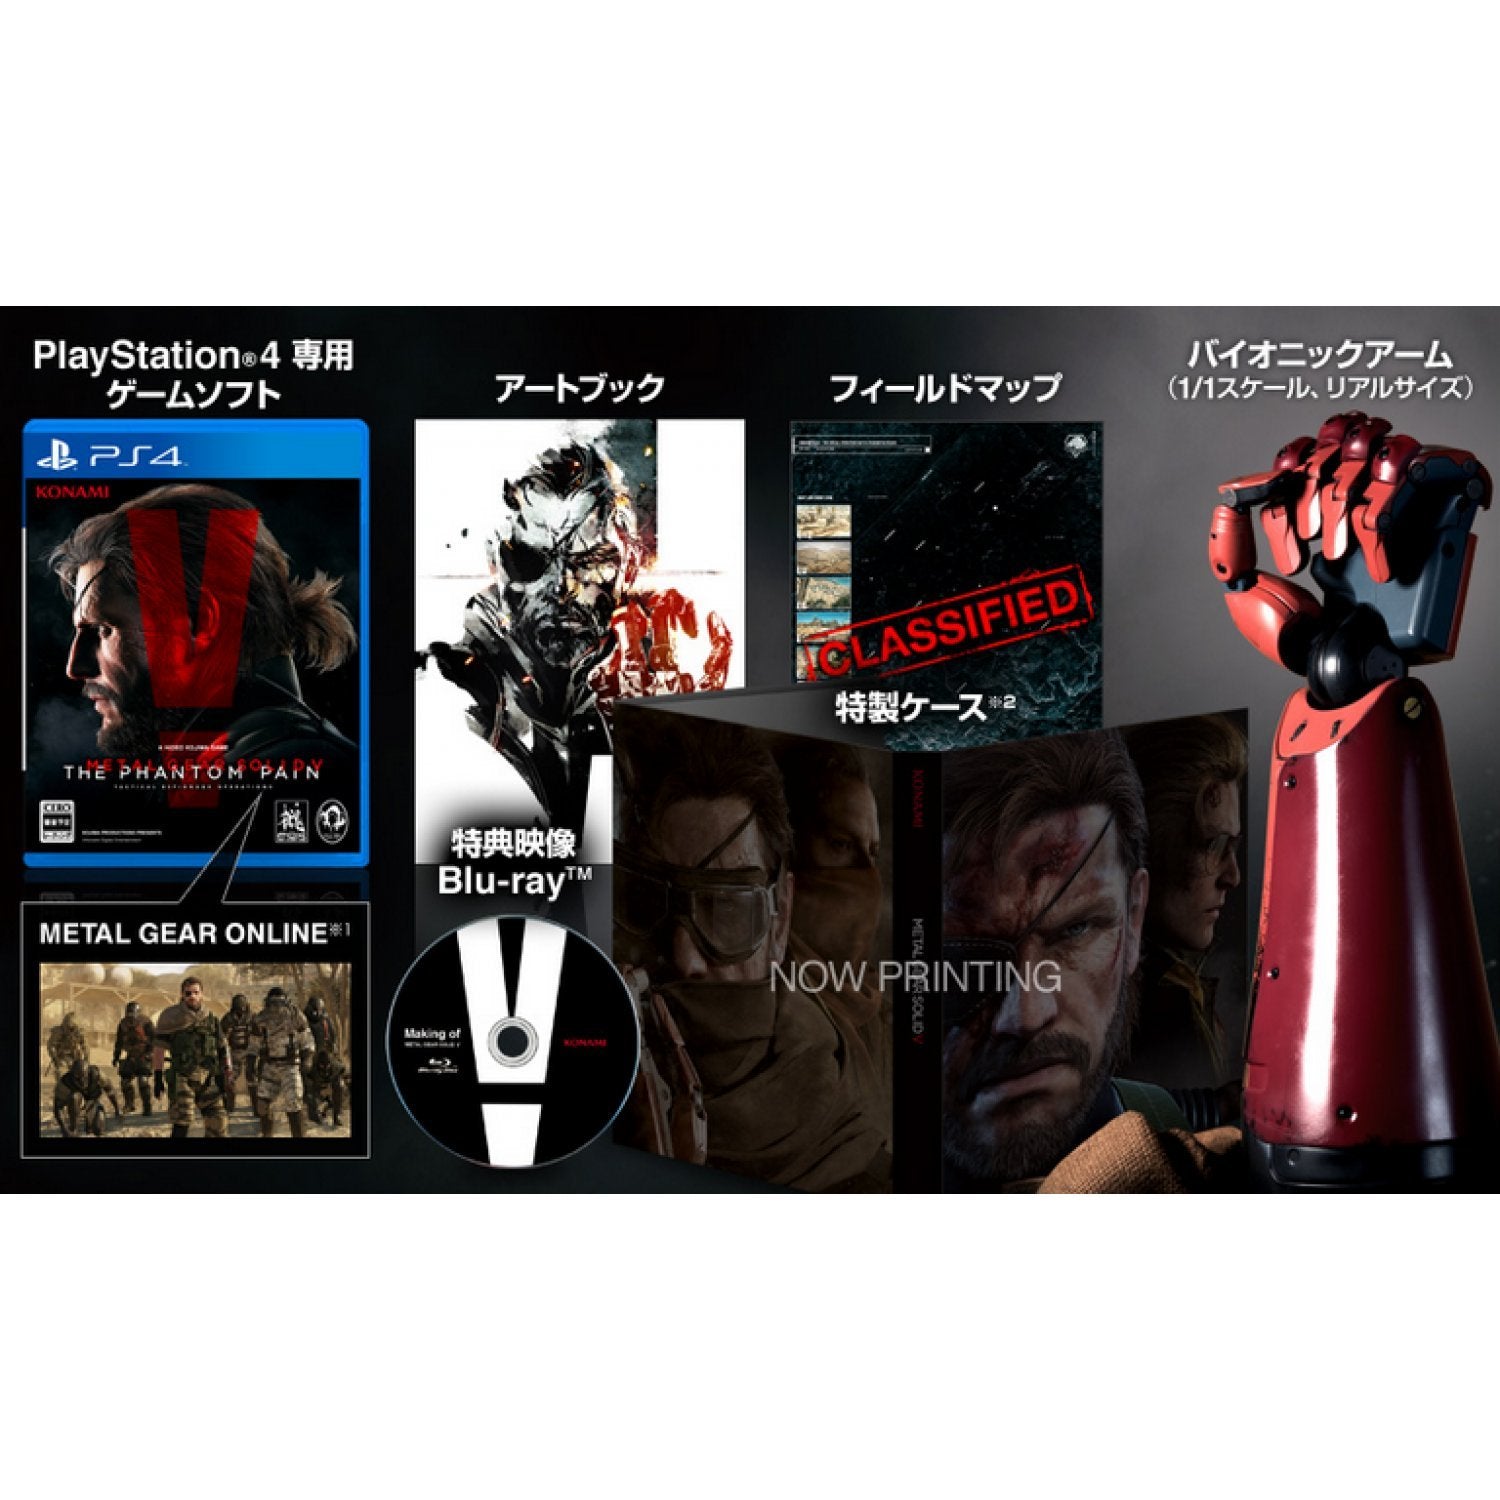 Metal Gear Solid V: The Phantom Pain Premium Package - (PS4) PlayStation 4 ( Japanese Import ) Video Games Konami   